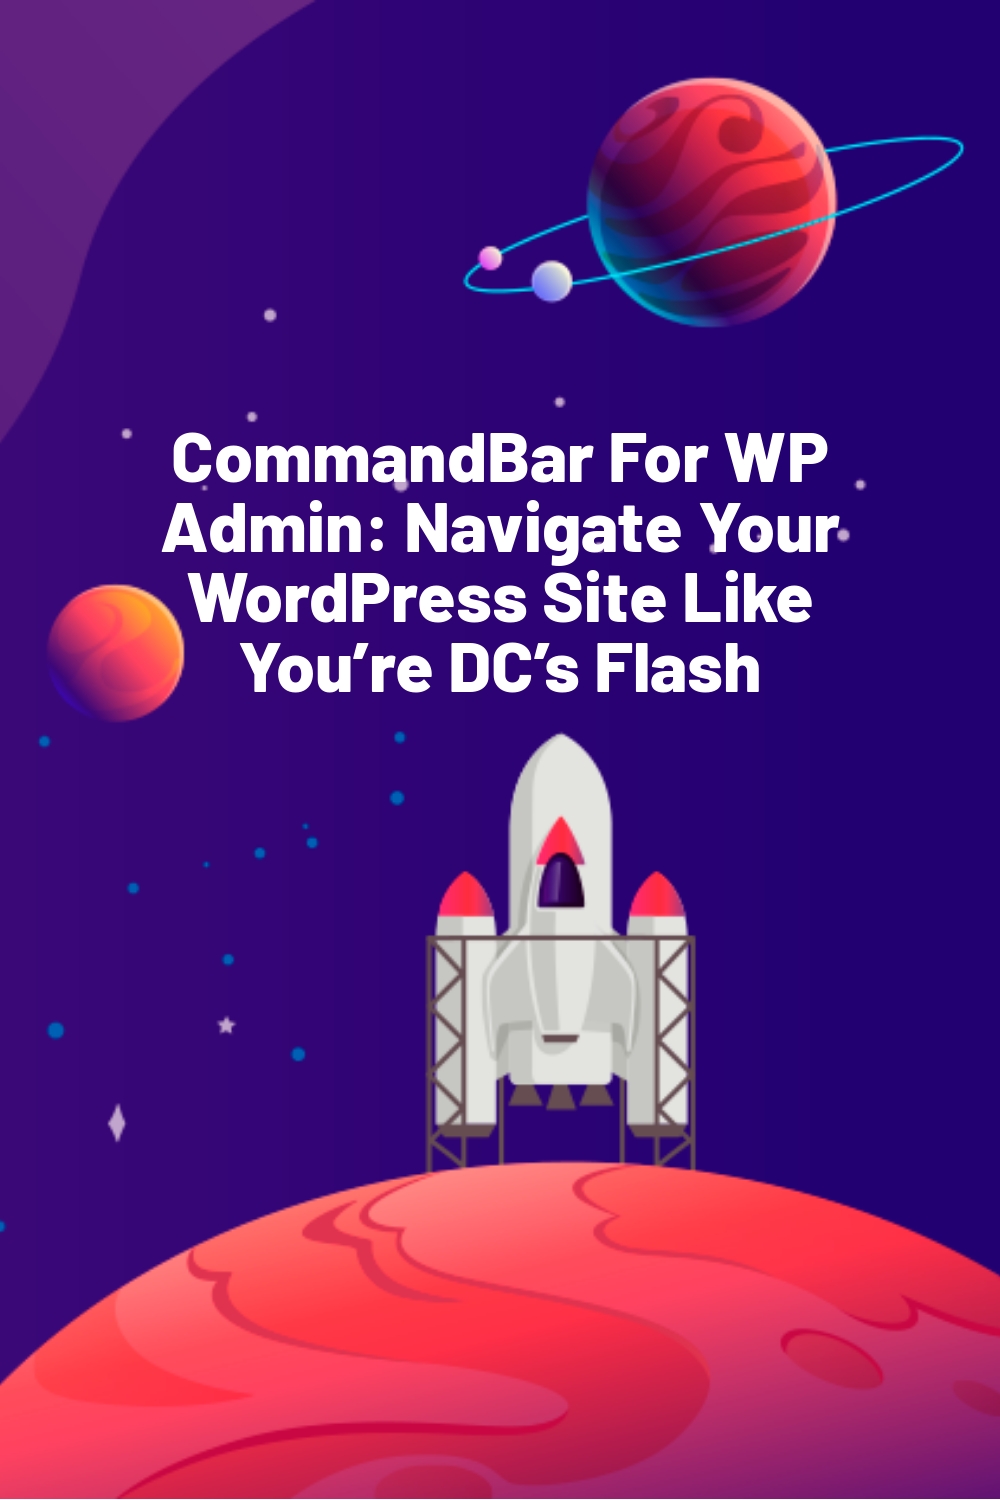 CommandBar For WP Admin: Navigate Your WordPress Site Like You’re DC’s Flash